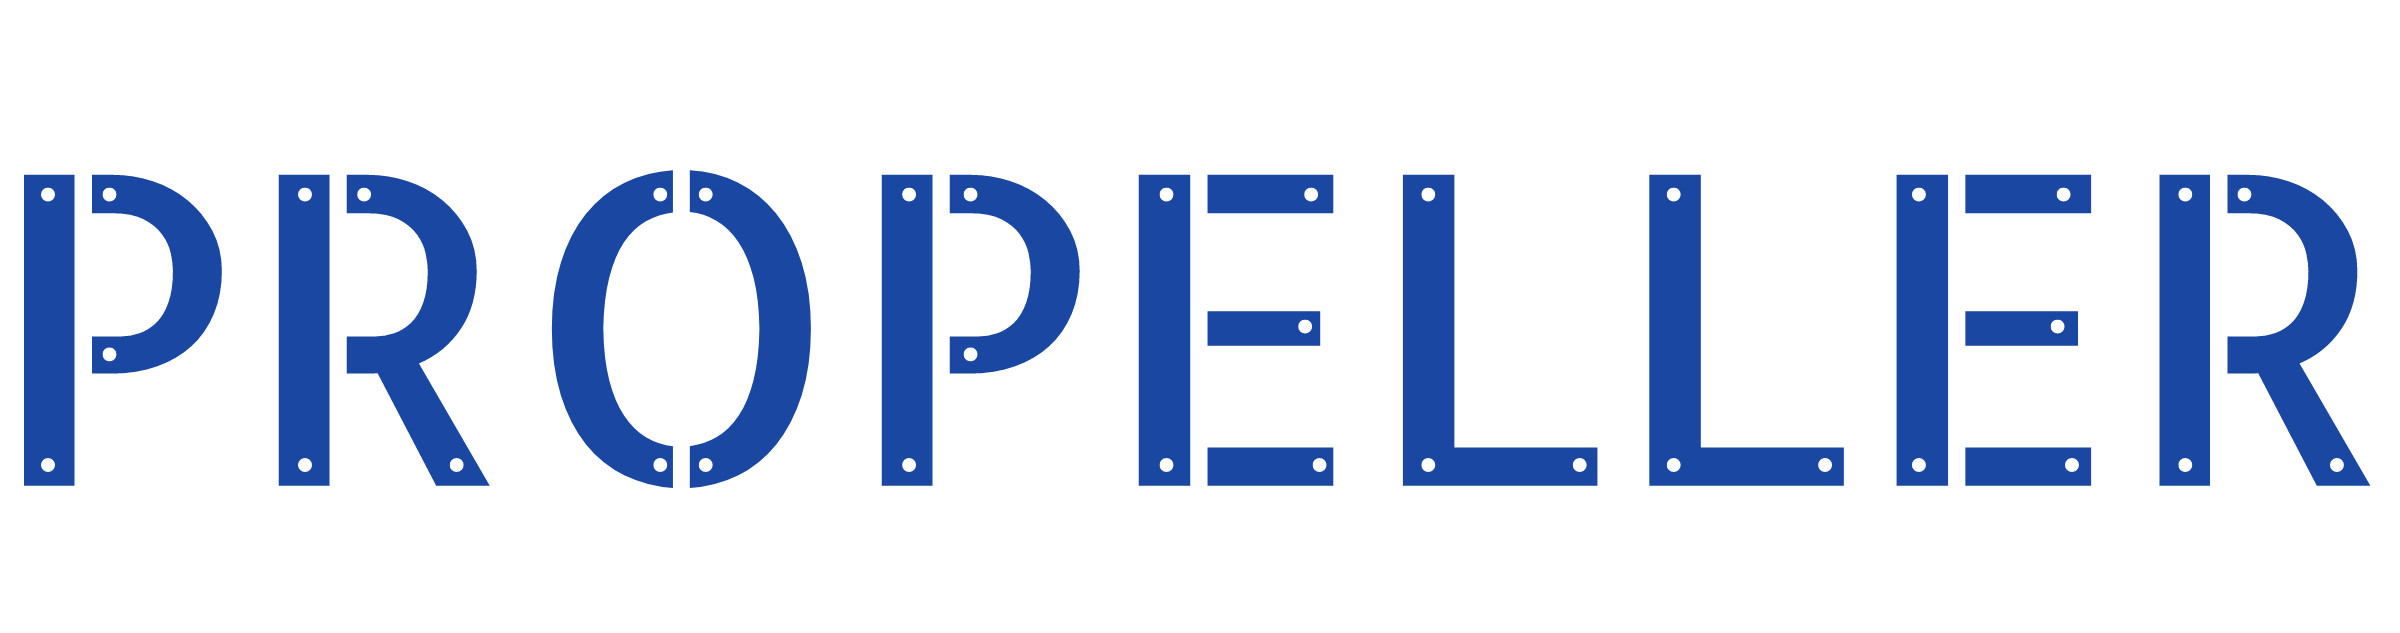 Propeller-logo.png